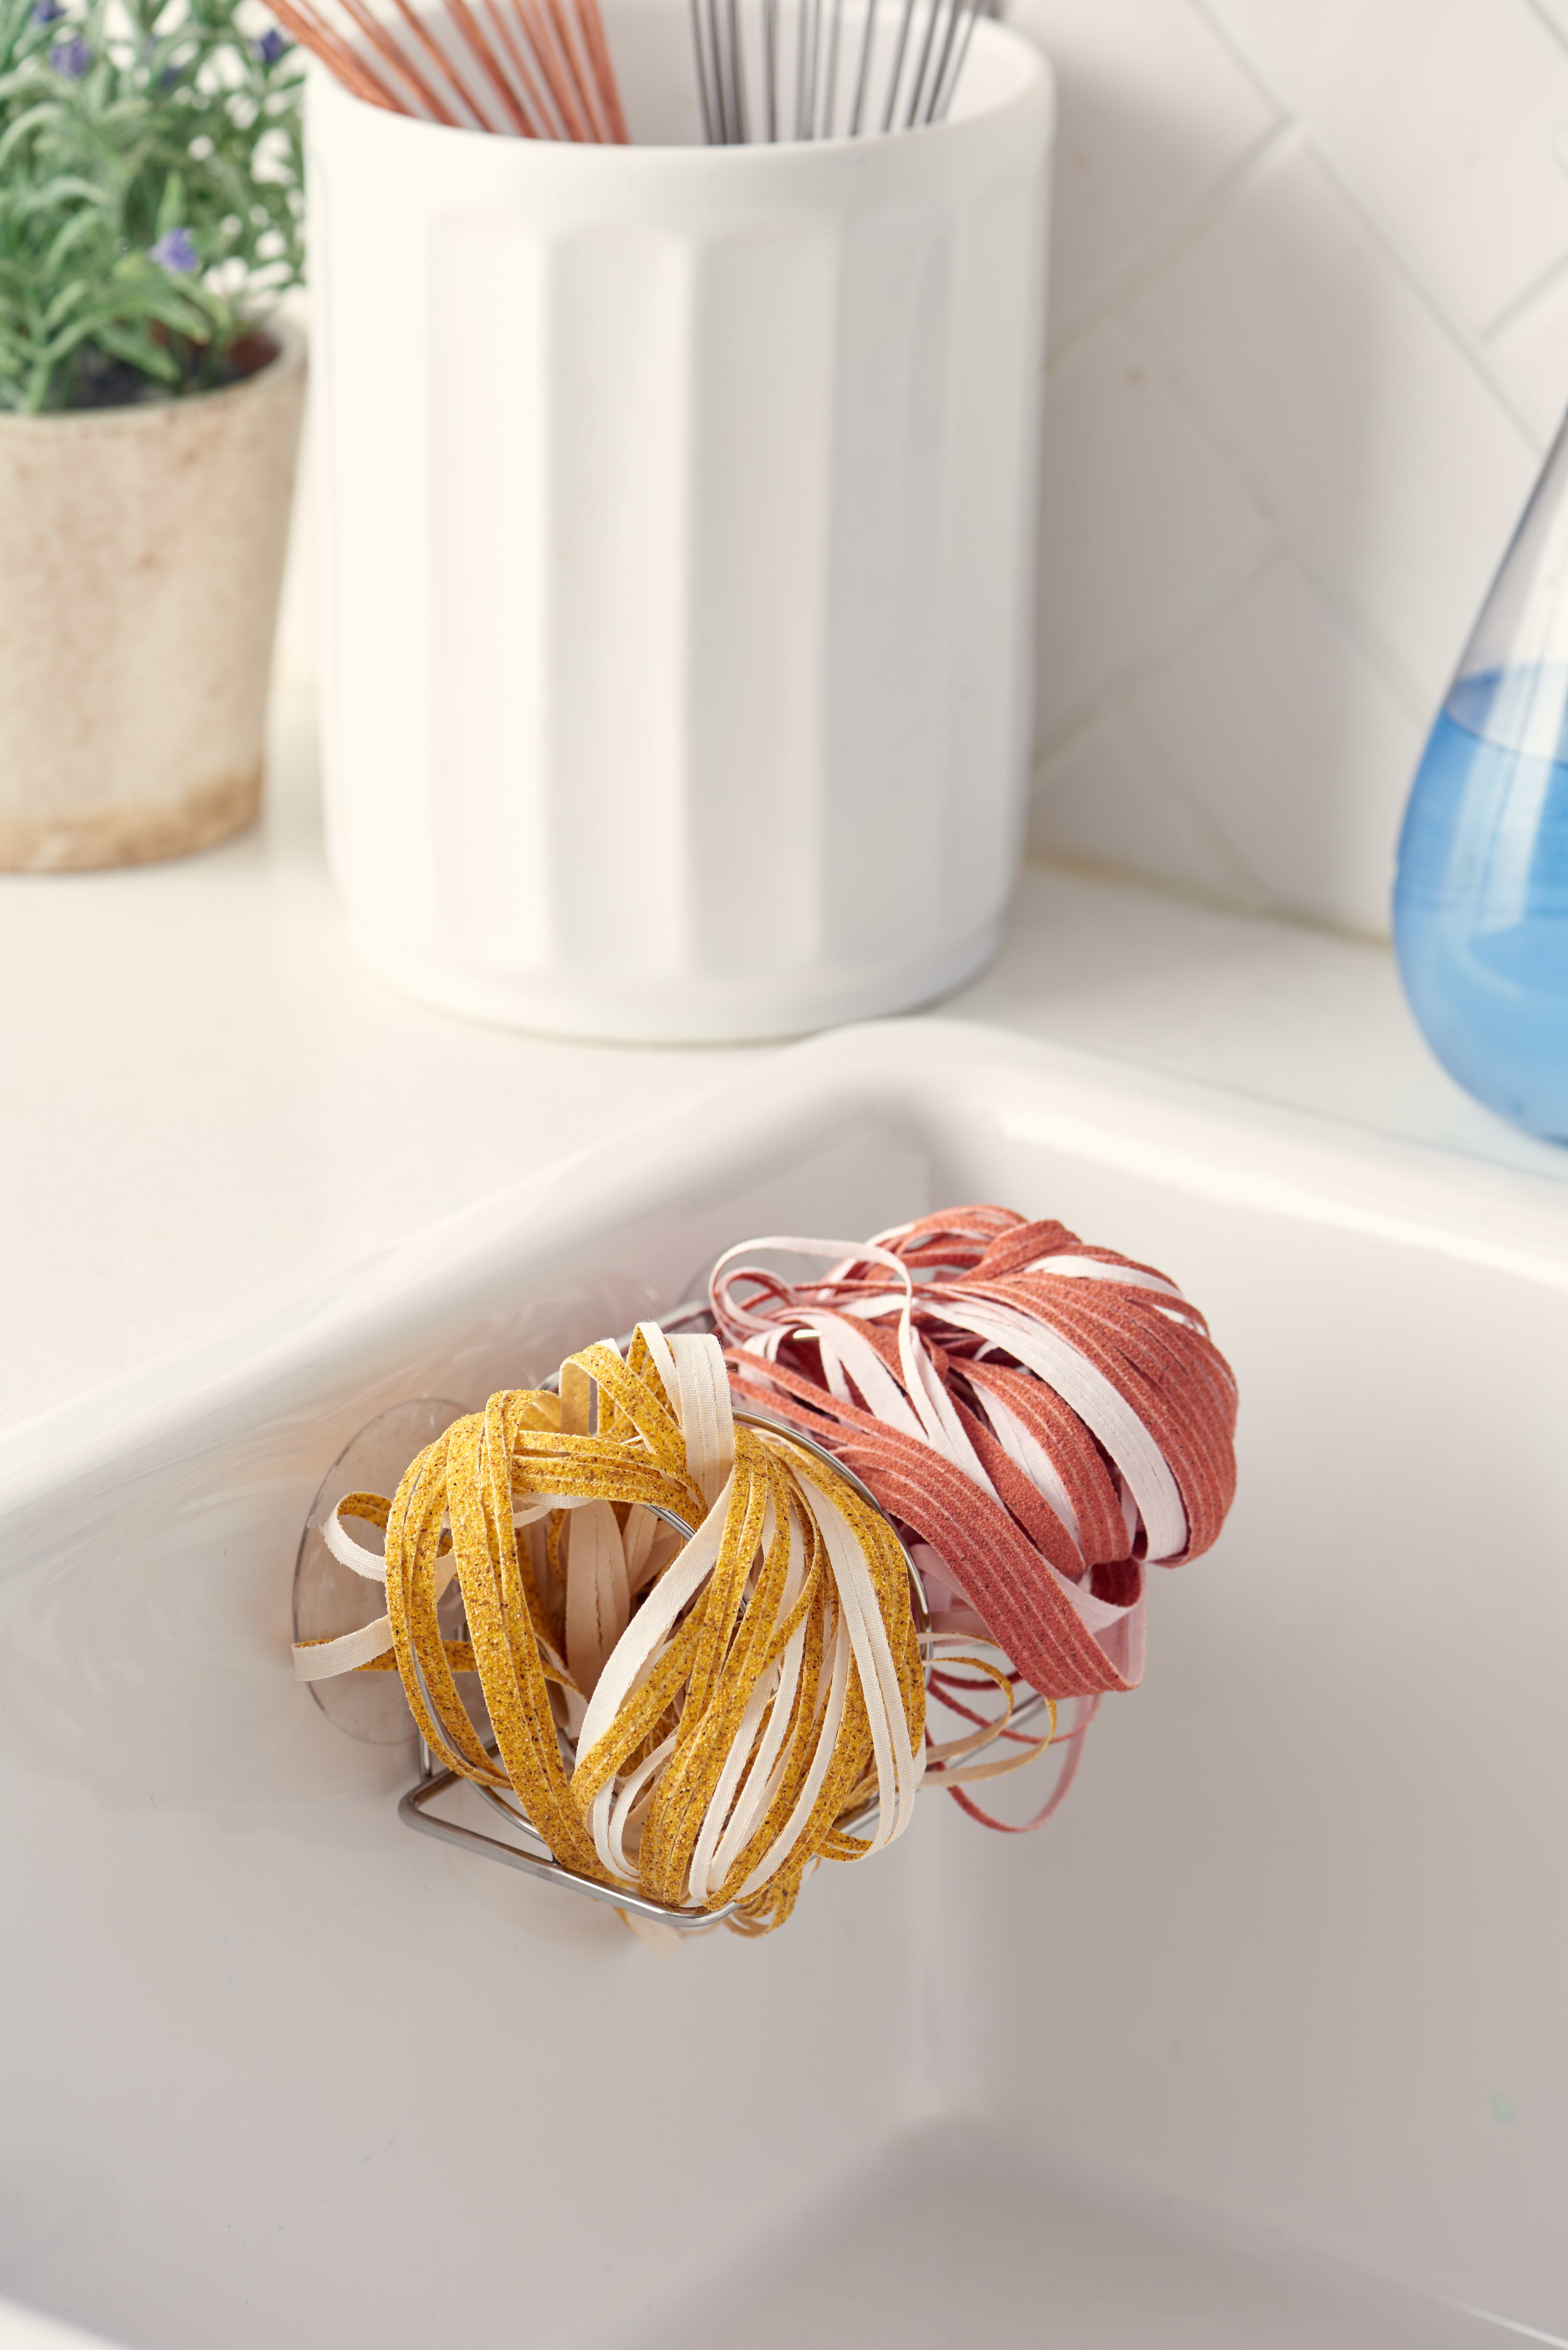 Original Spaghetti Scrubs: Environmentally friendly dish scrubs